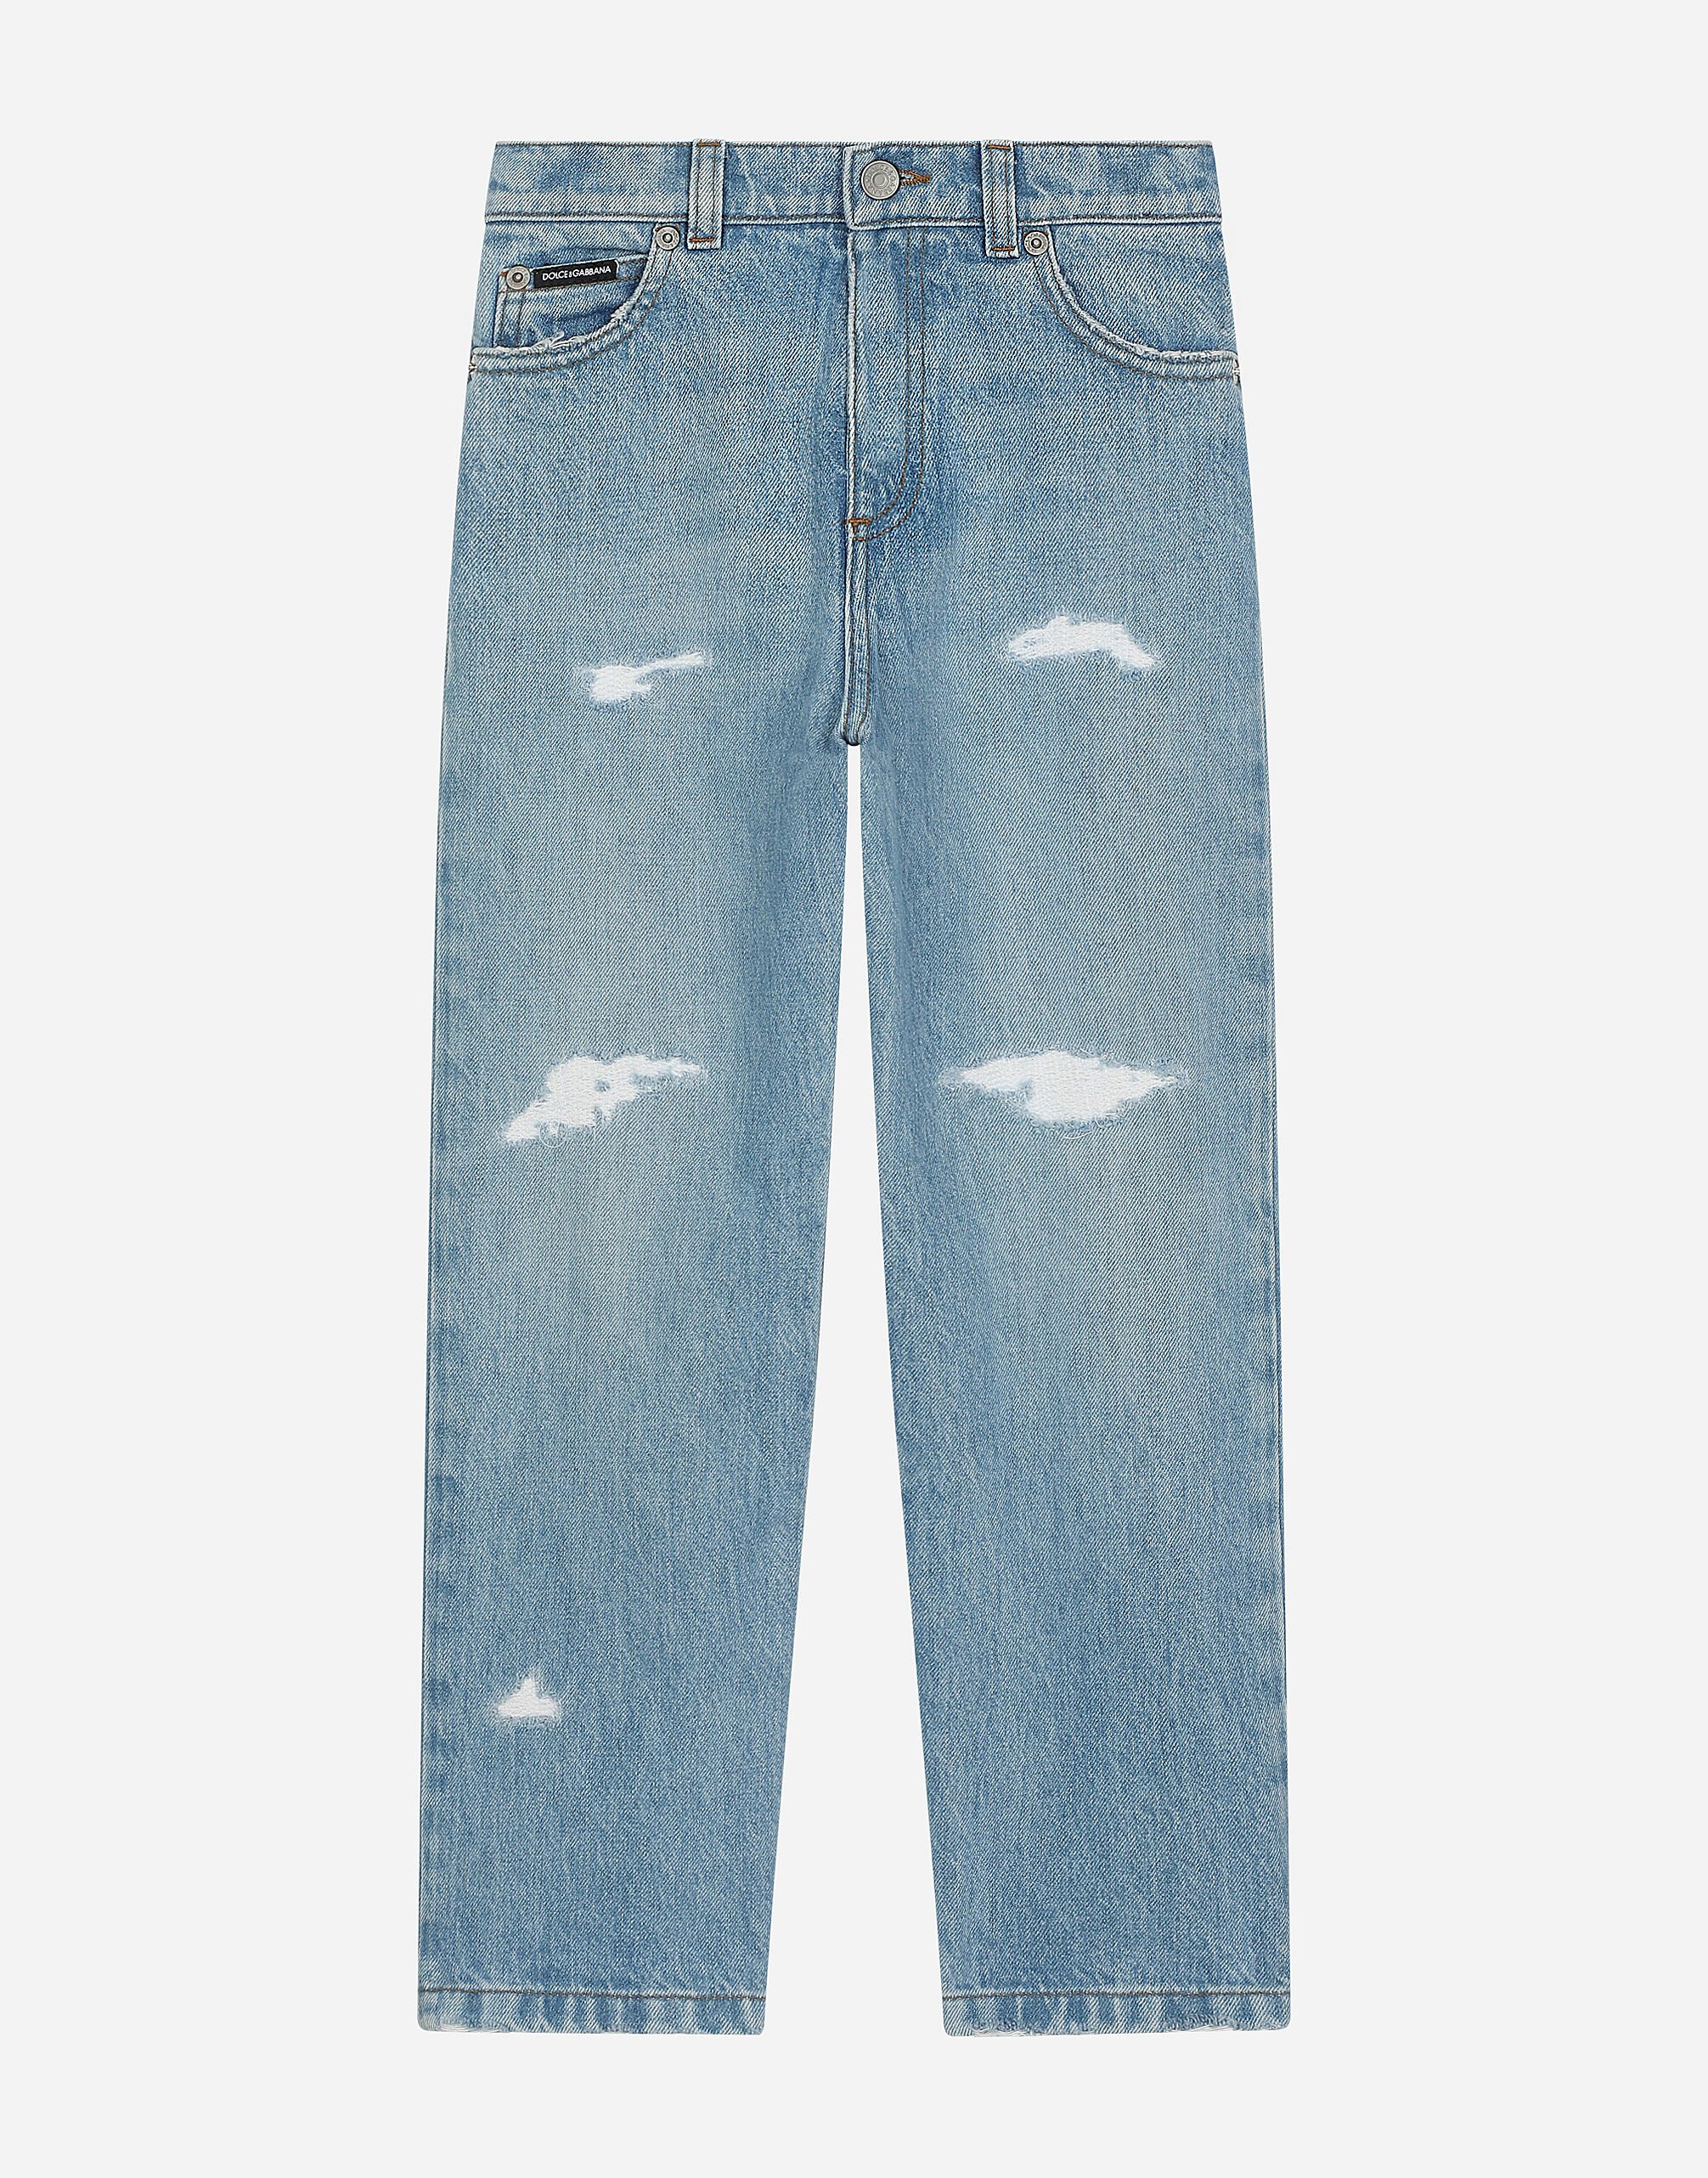 Dolce & Gabbana 5-pocket denim jeans with logo tag Beige L43Q54G7NWW